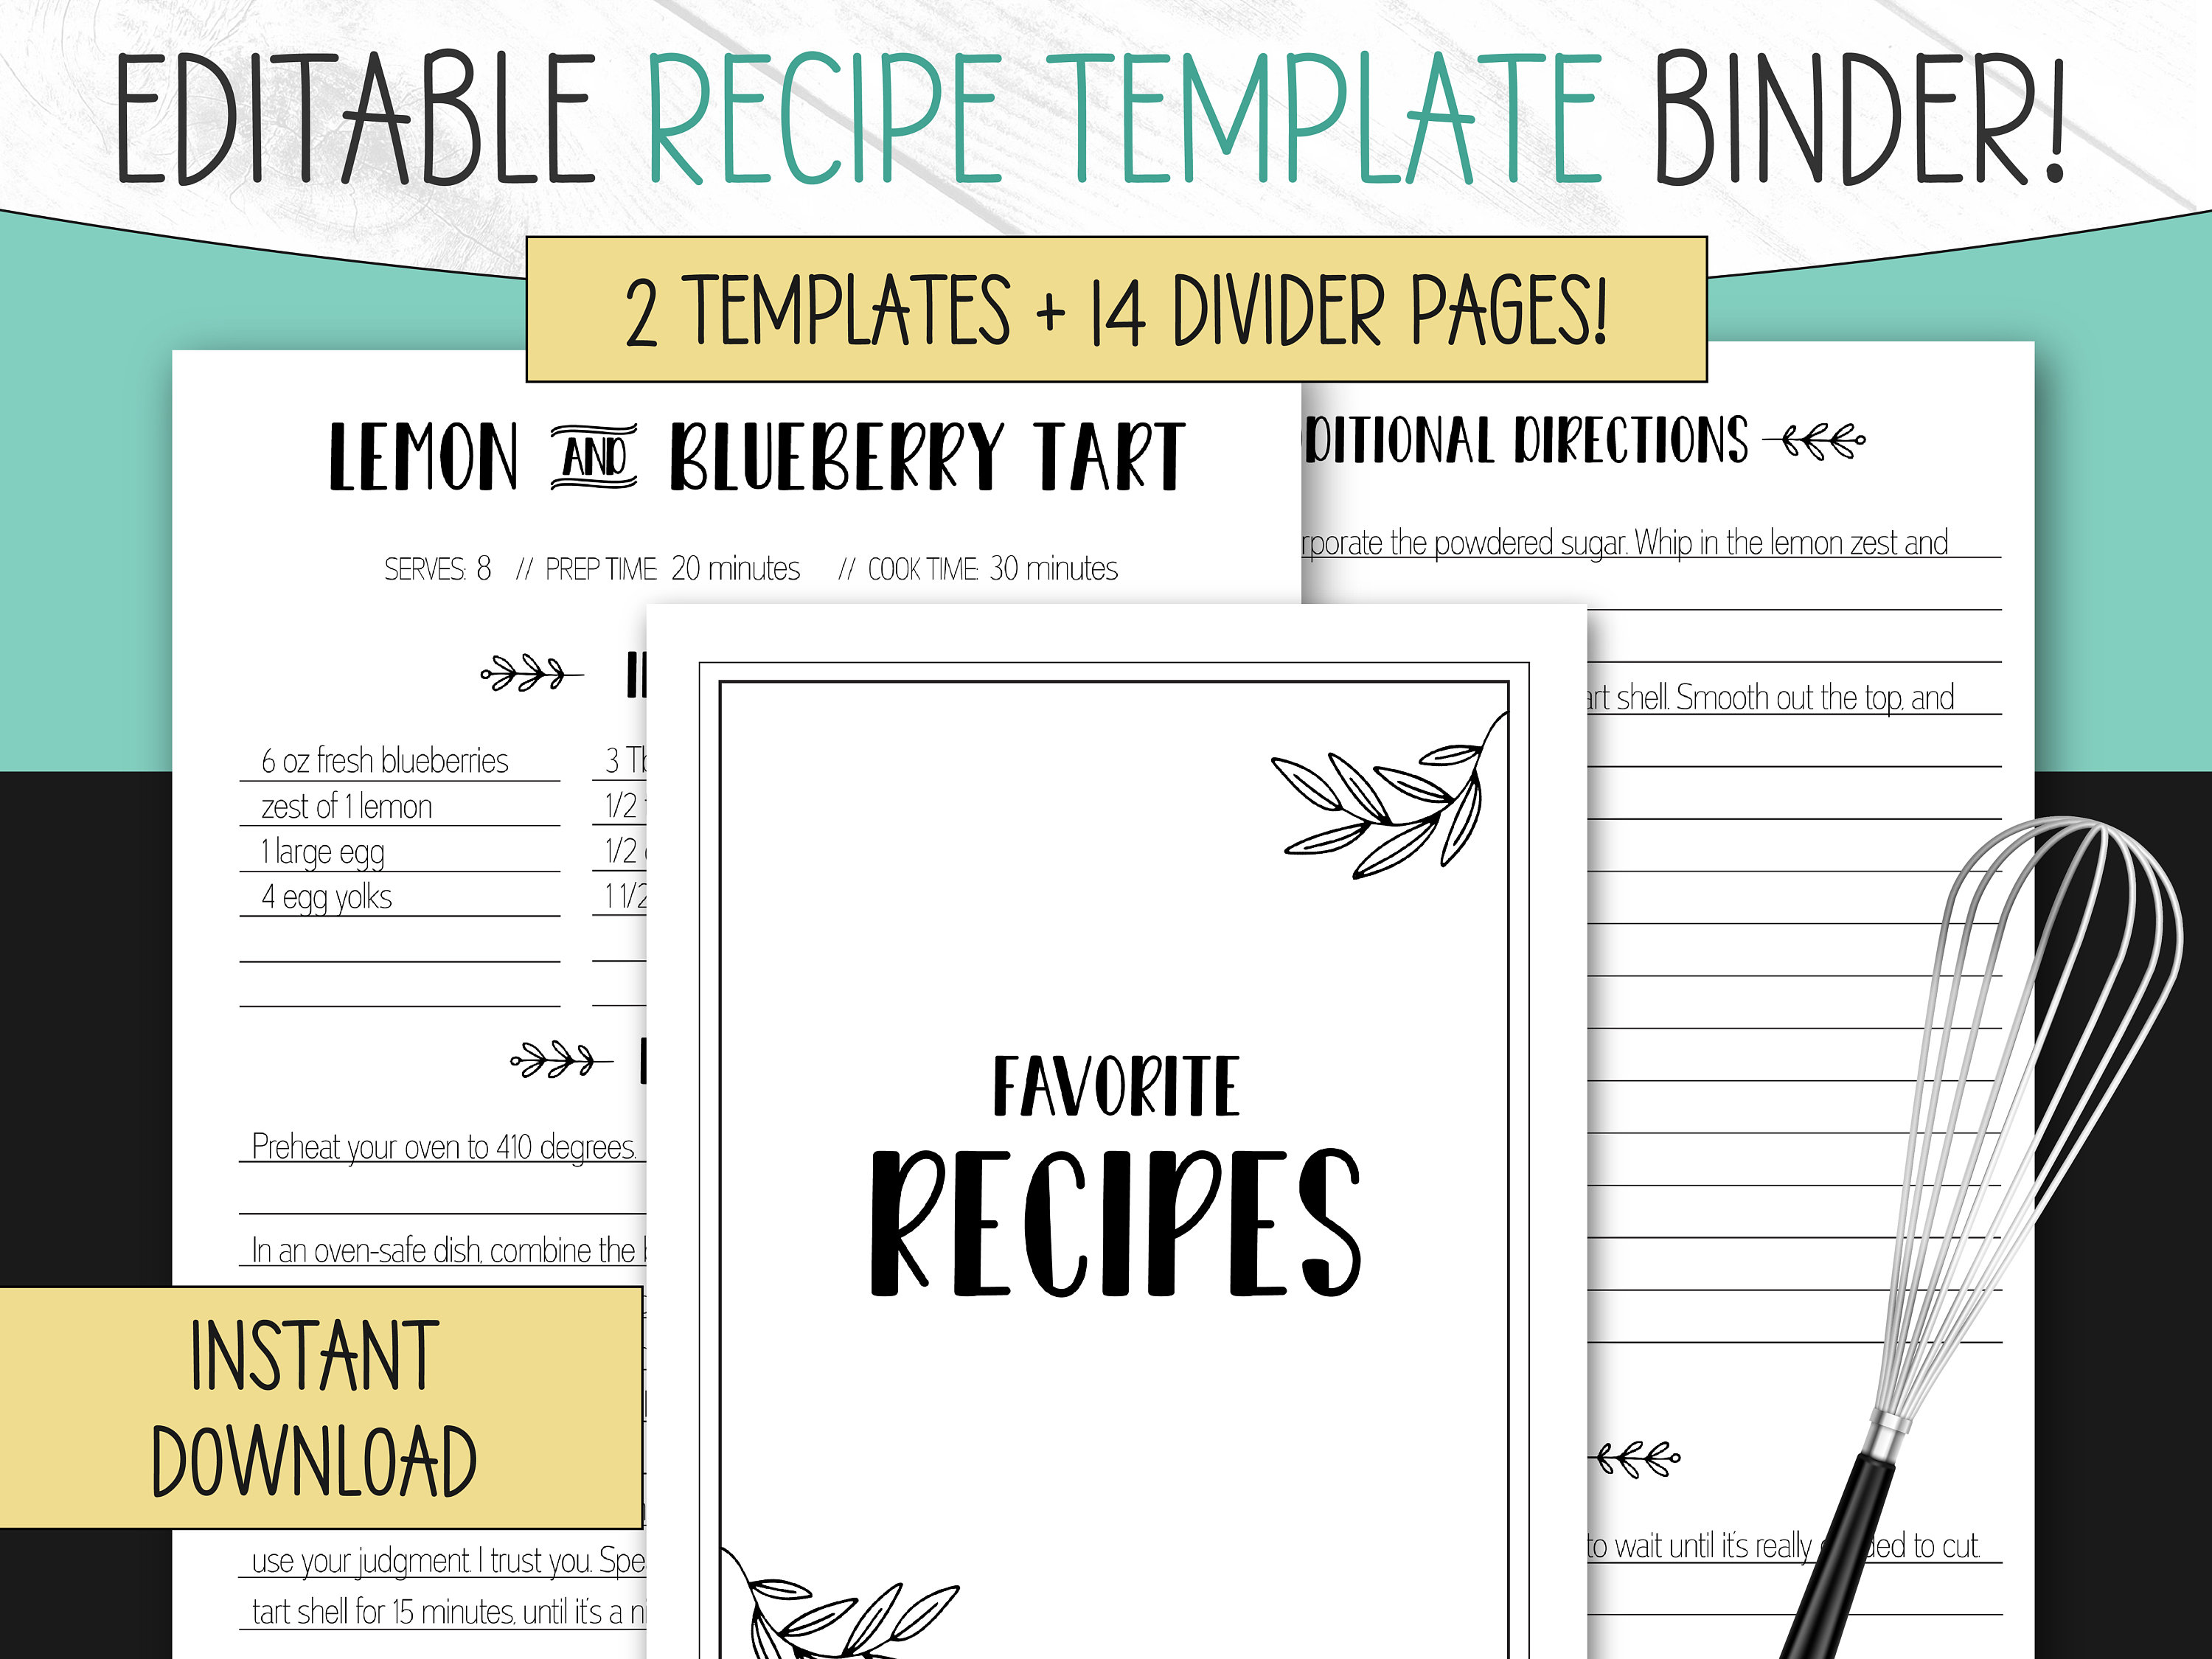 Printable Recipe Book Inserts - Anna Grunduls Design